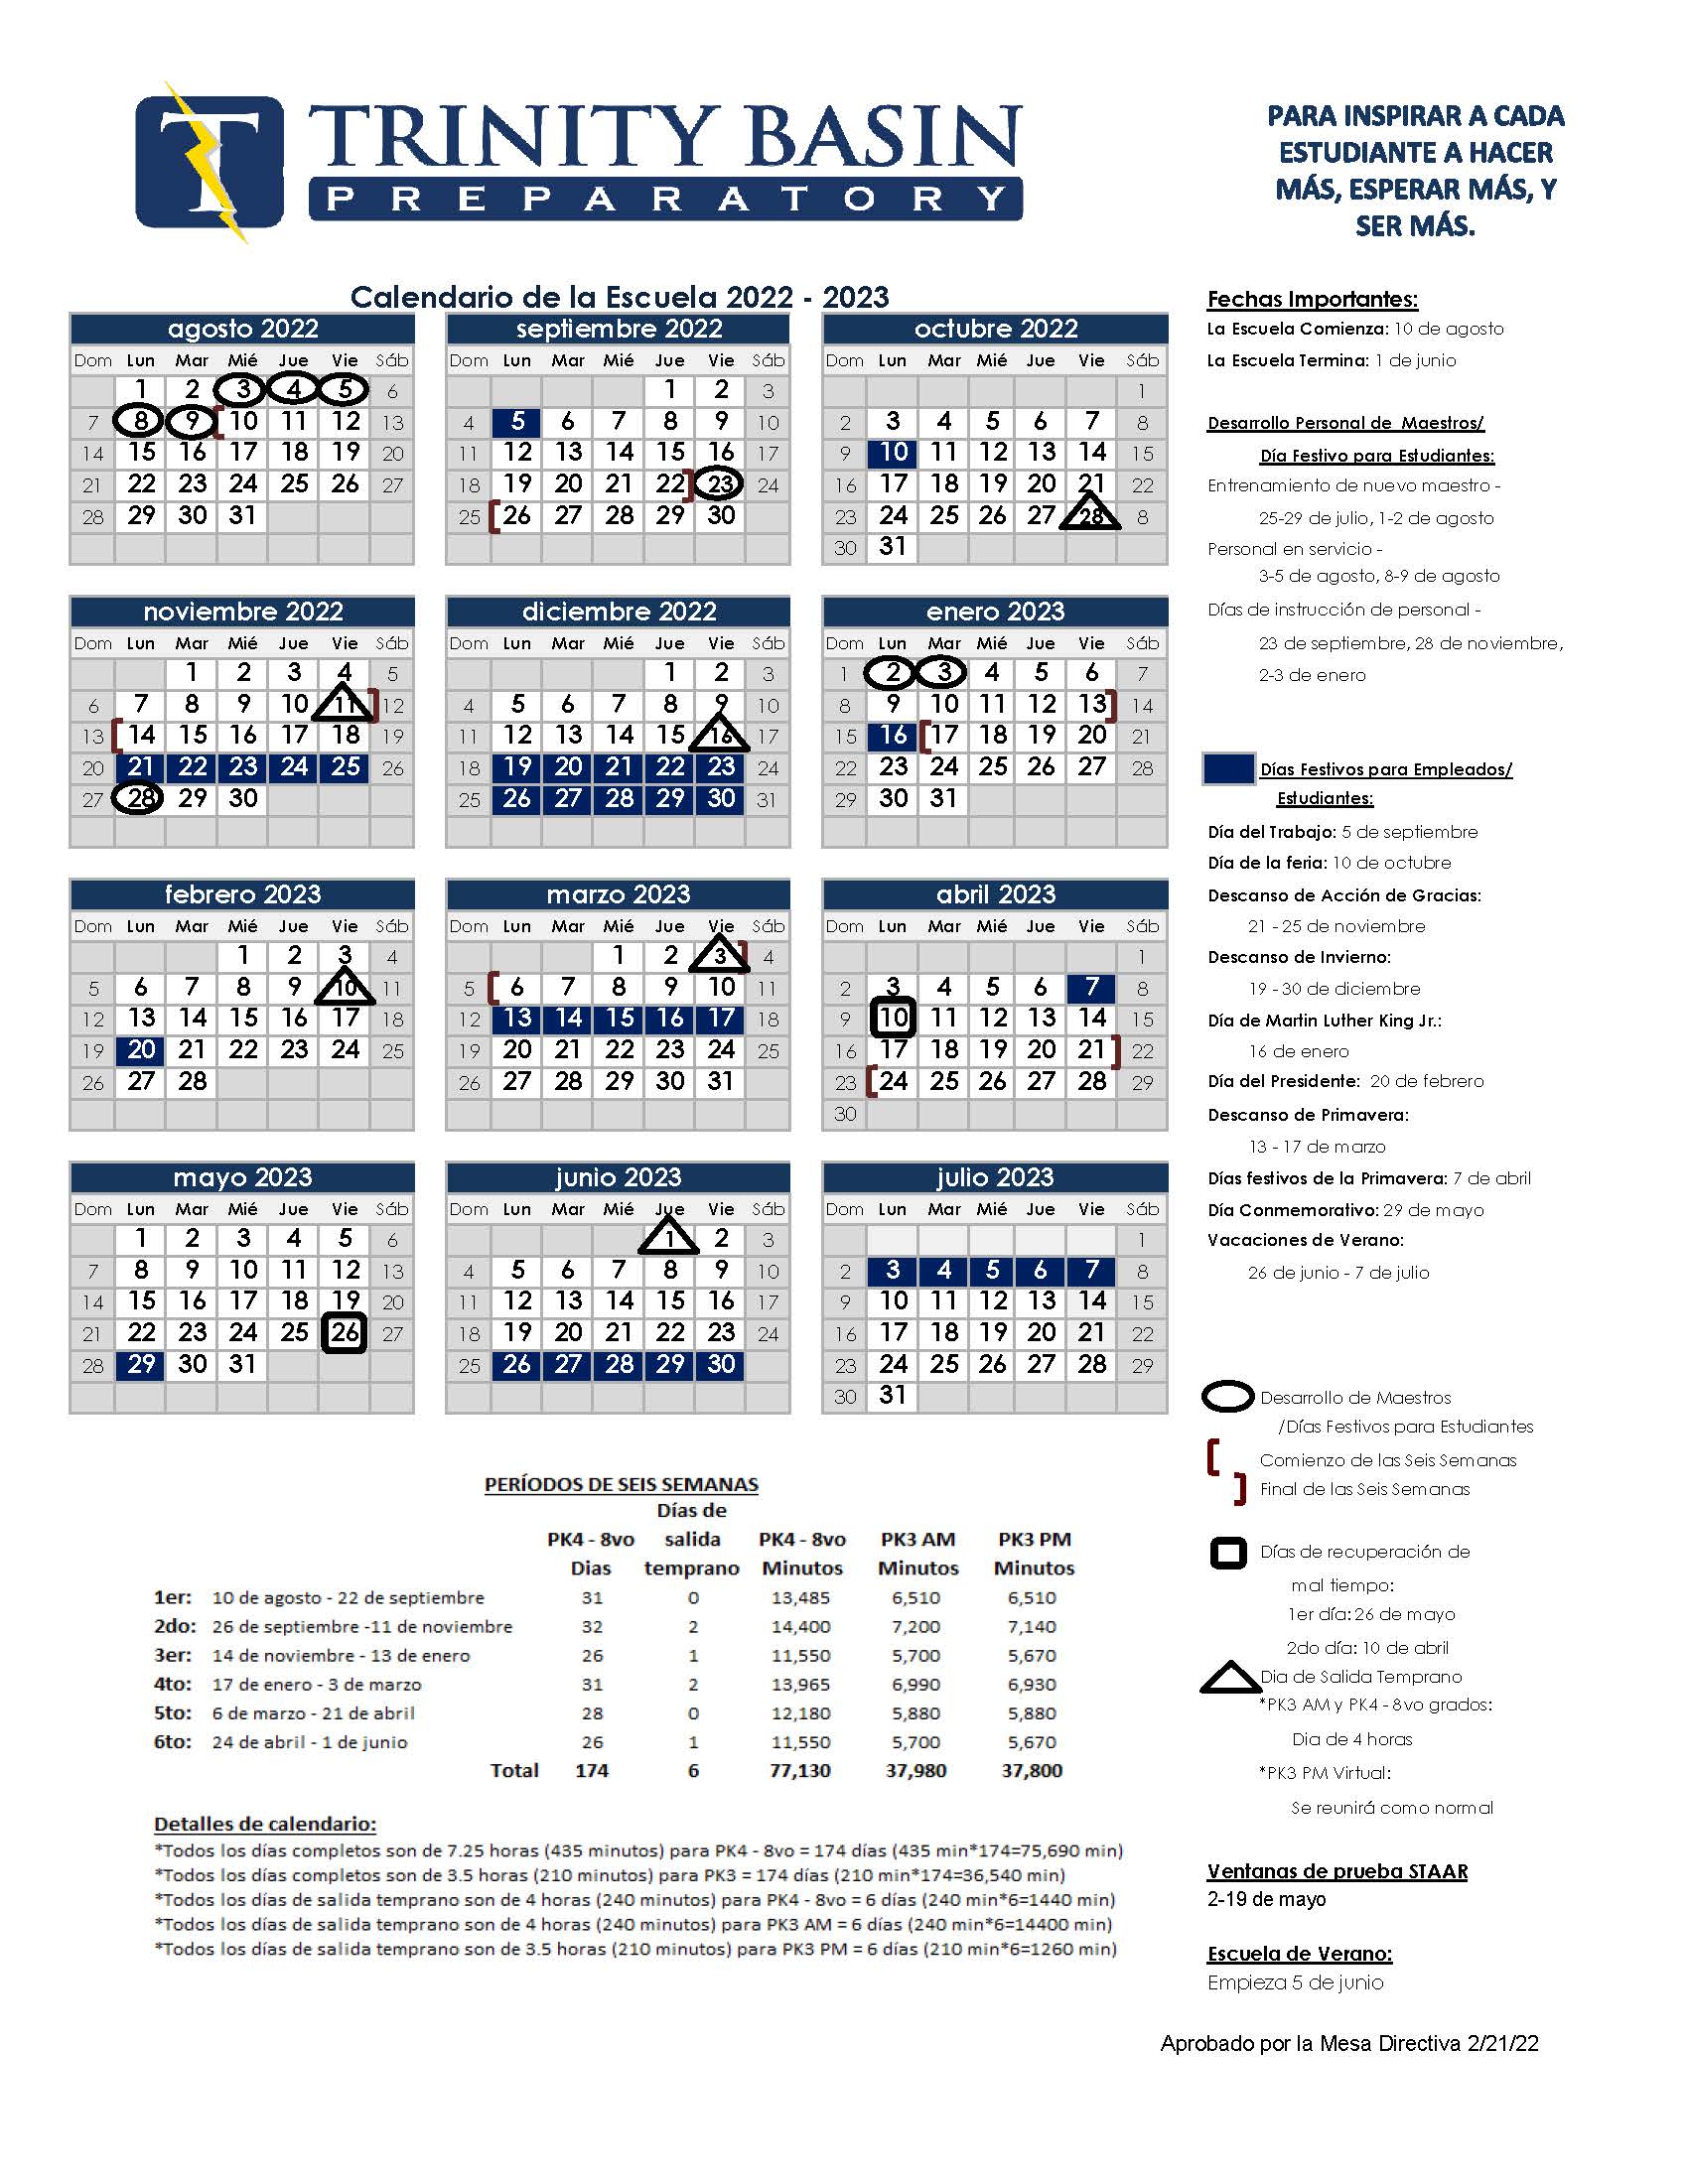 Trinity Basin Preparatory District Calendar